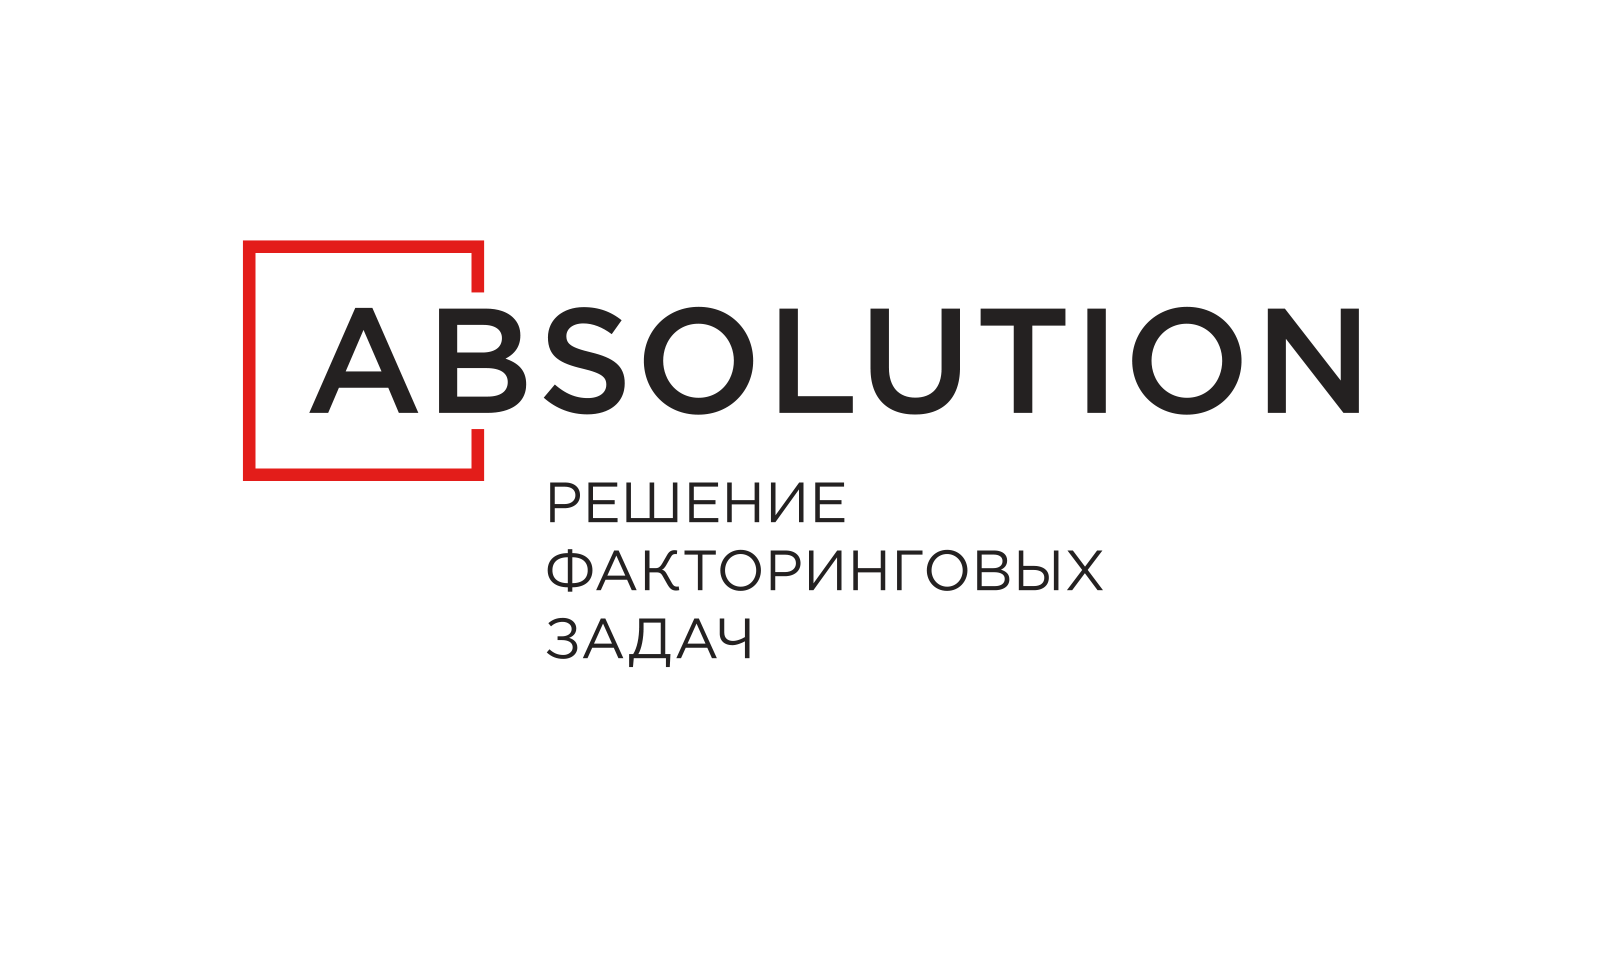 Логотип Absolution. Факторинговые компании логотипы. Факторинговые компании Москва. Absolution факторинг. Факторинг москва